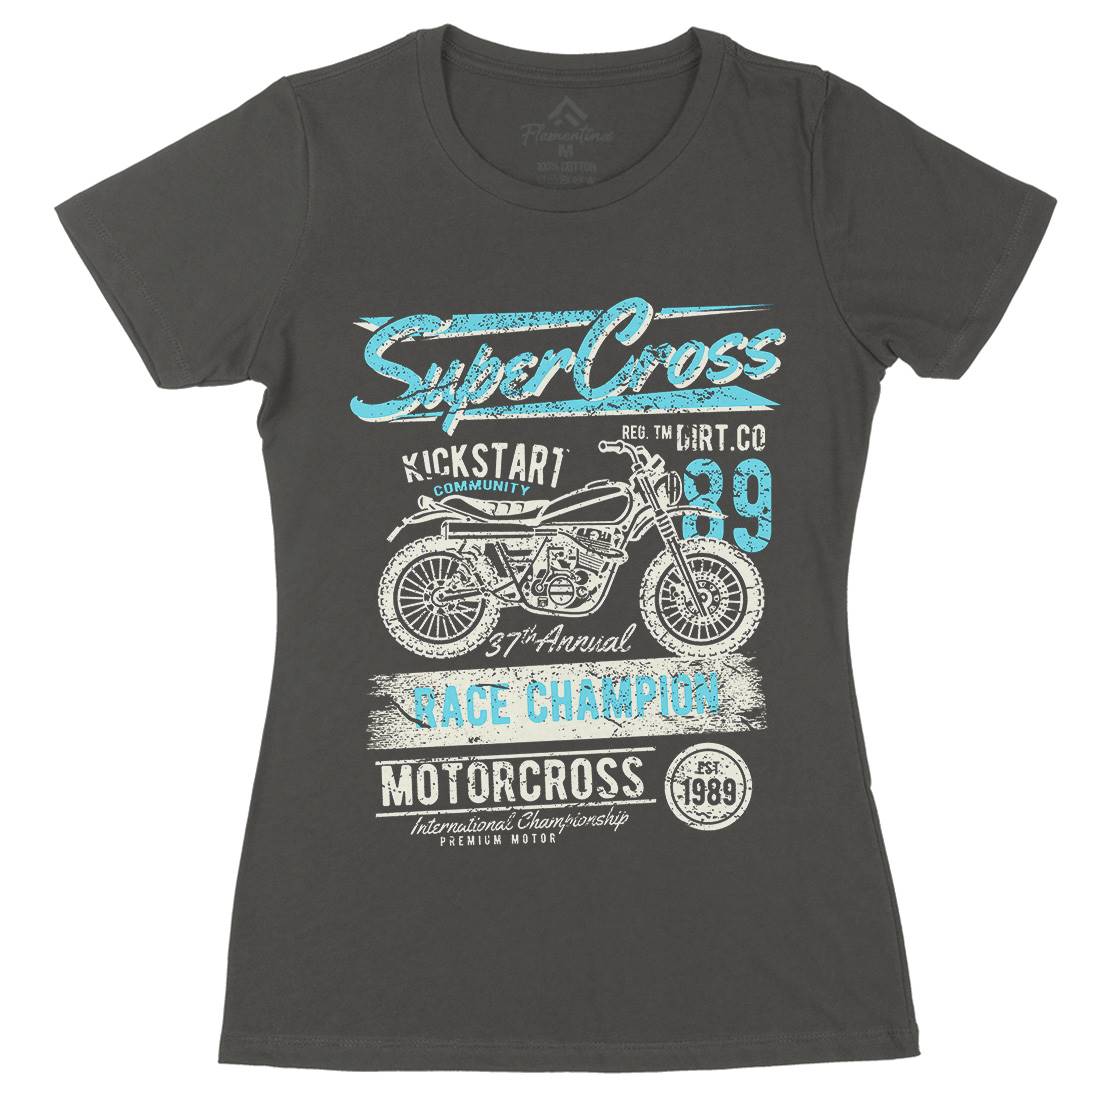 Super Cross Womens Organic Crew Neck T-Shirt Motorcycles A165